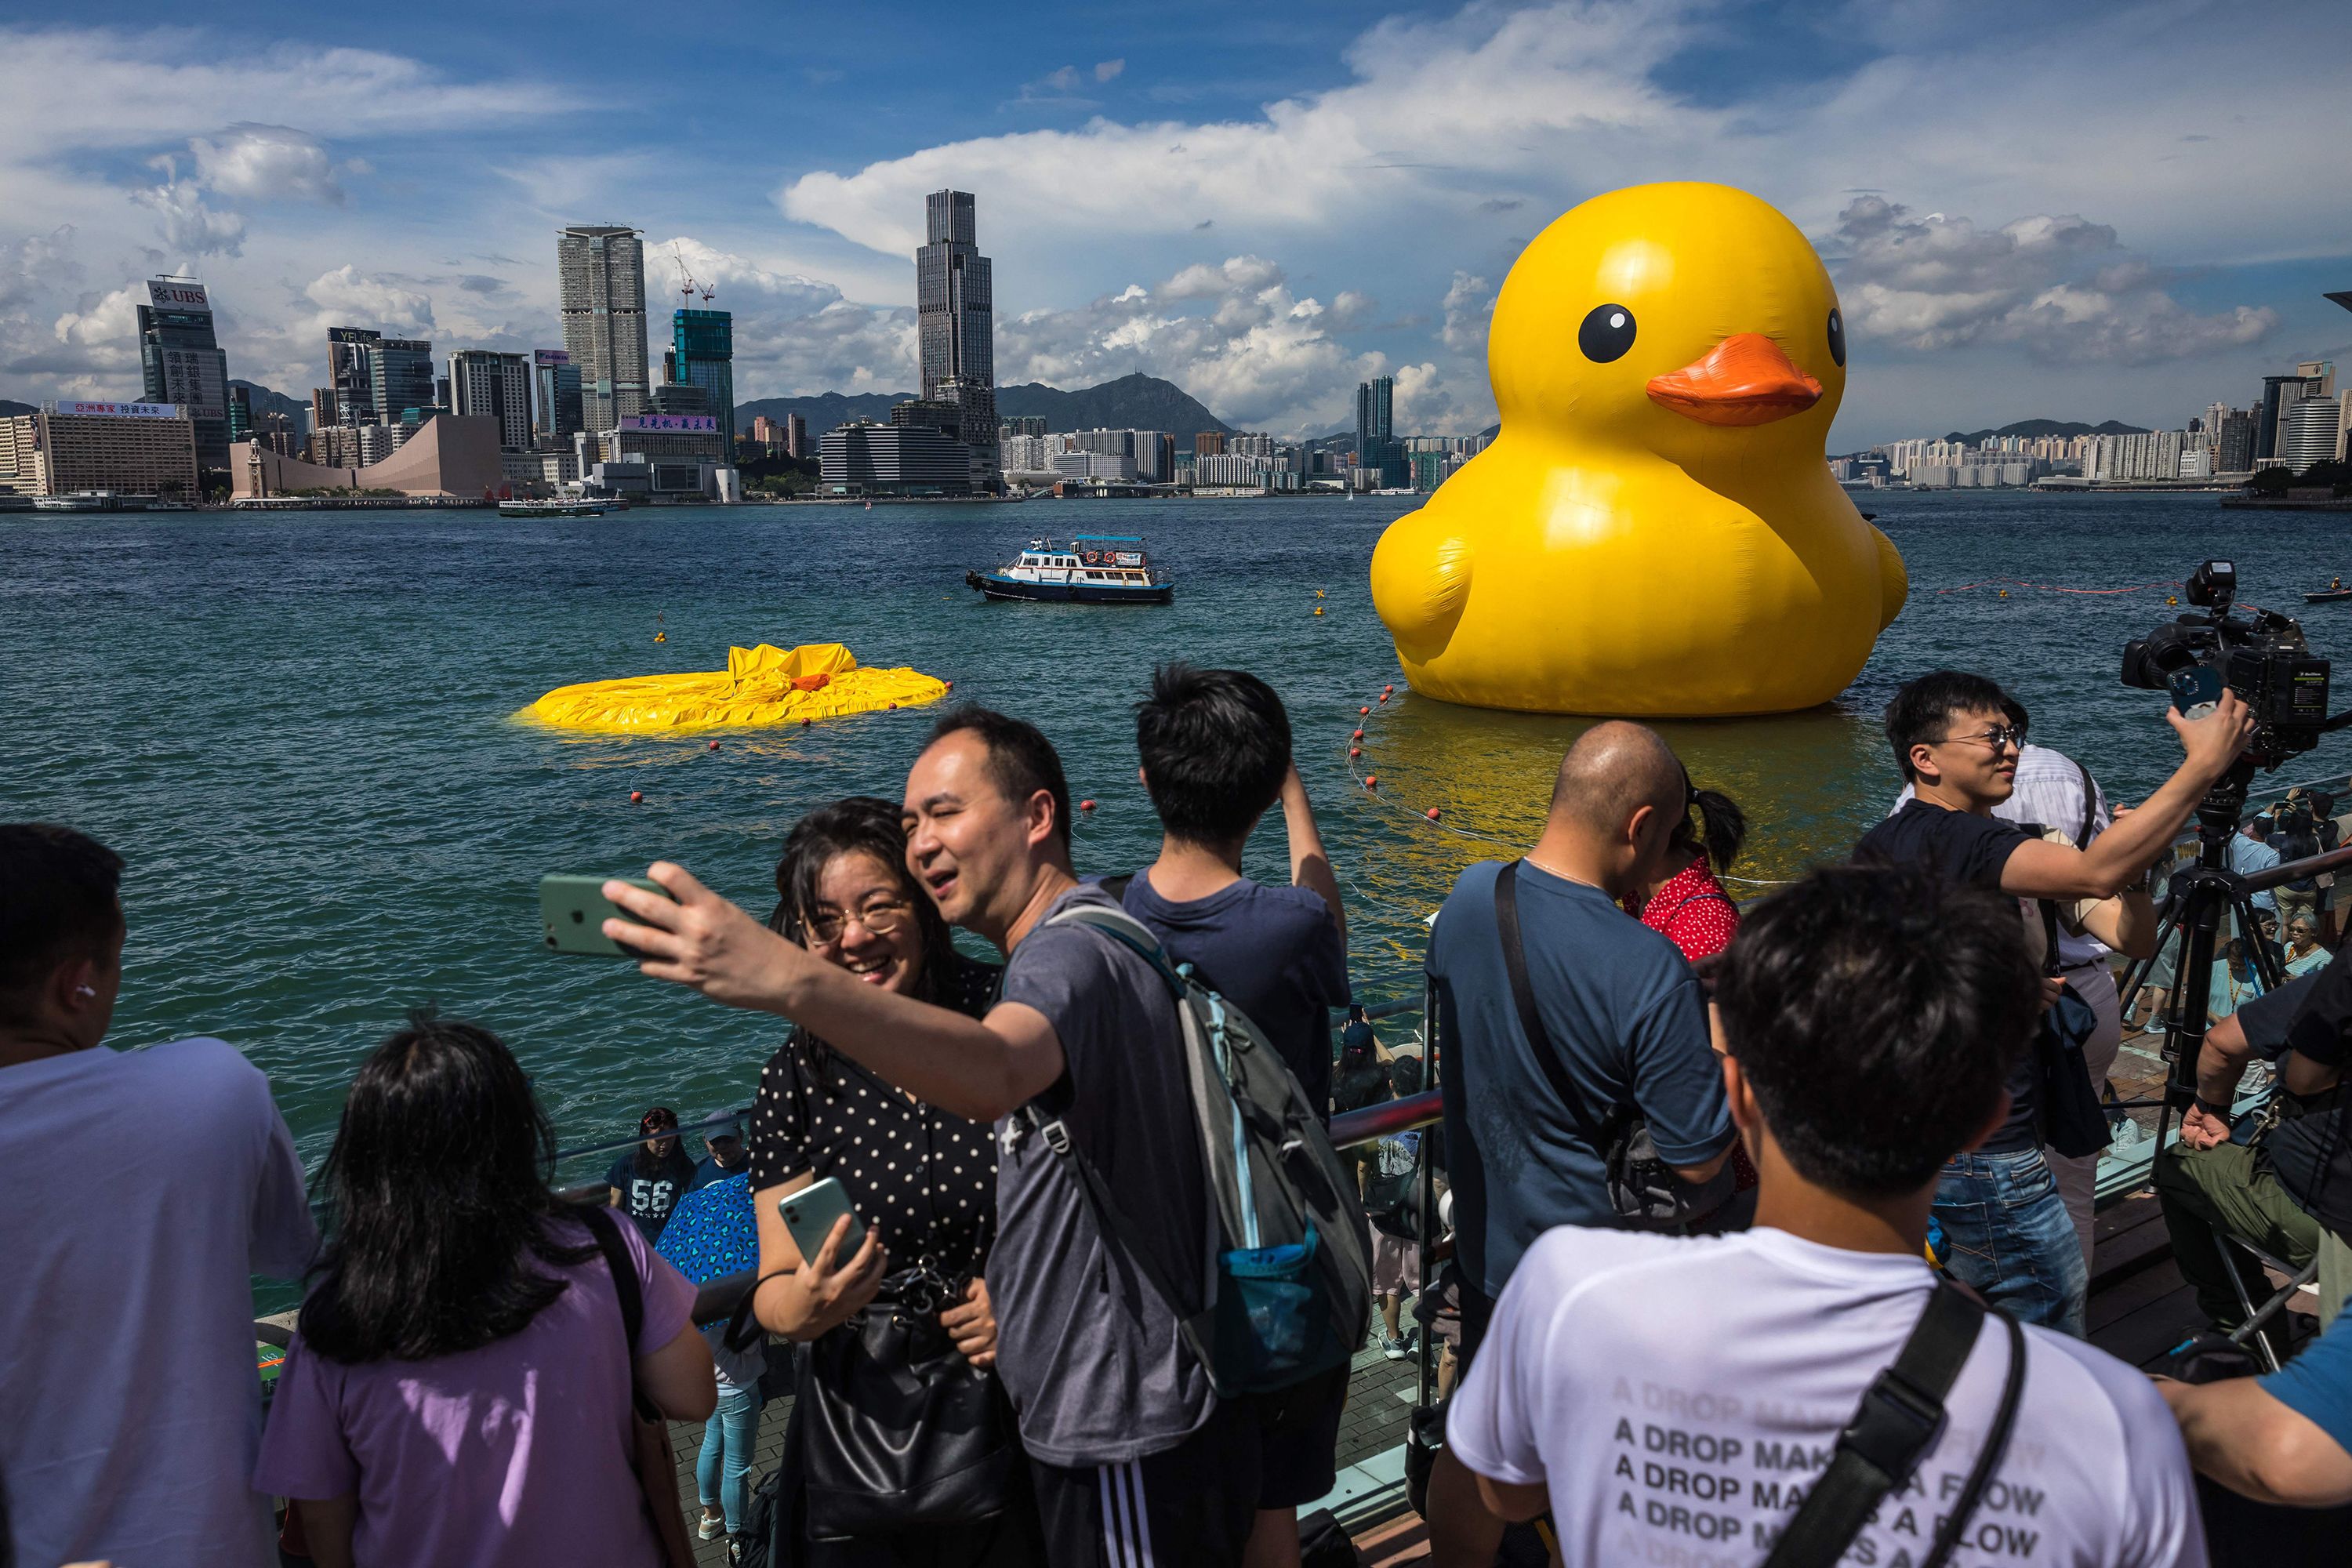 Giant rubber duck deflated in Hong Kong's harbor amid fierce heat